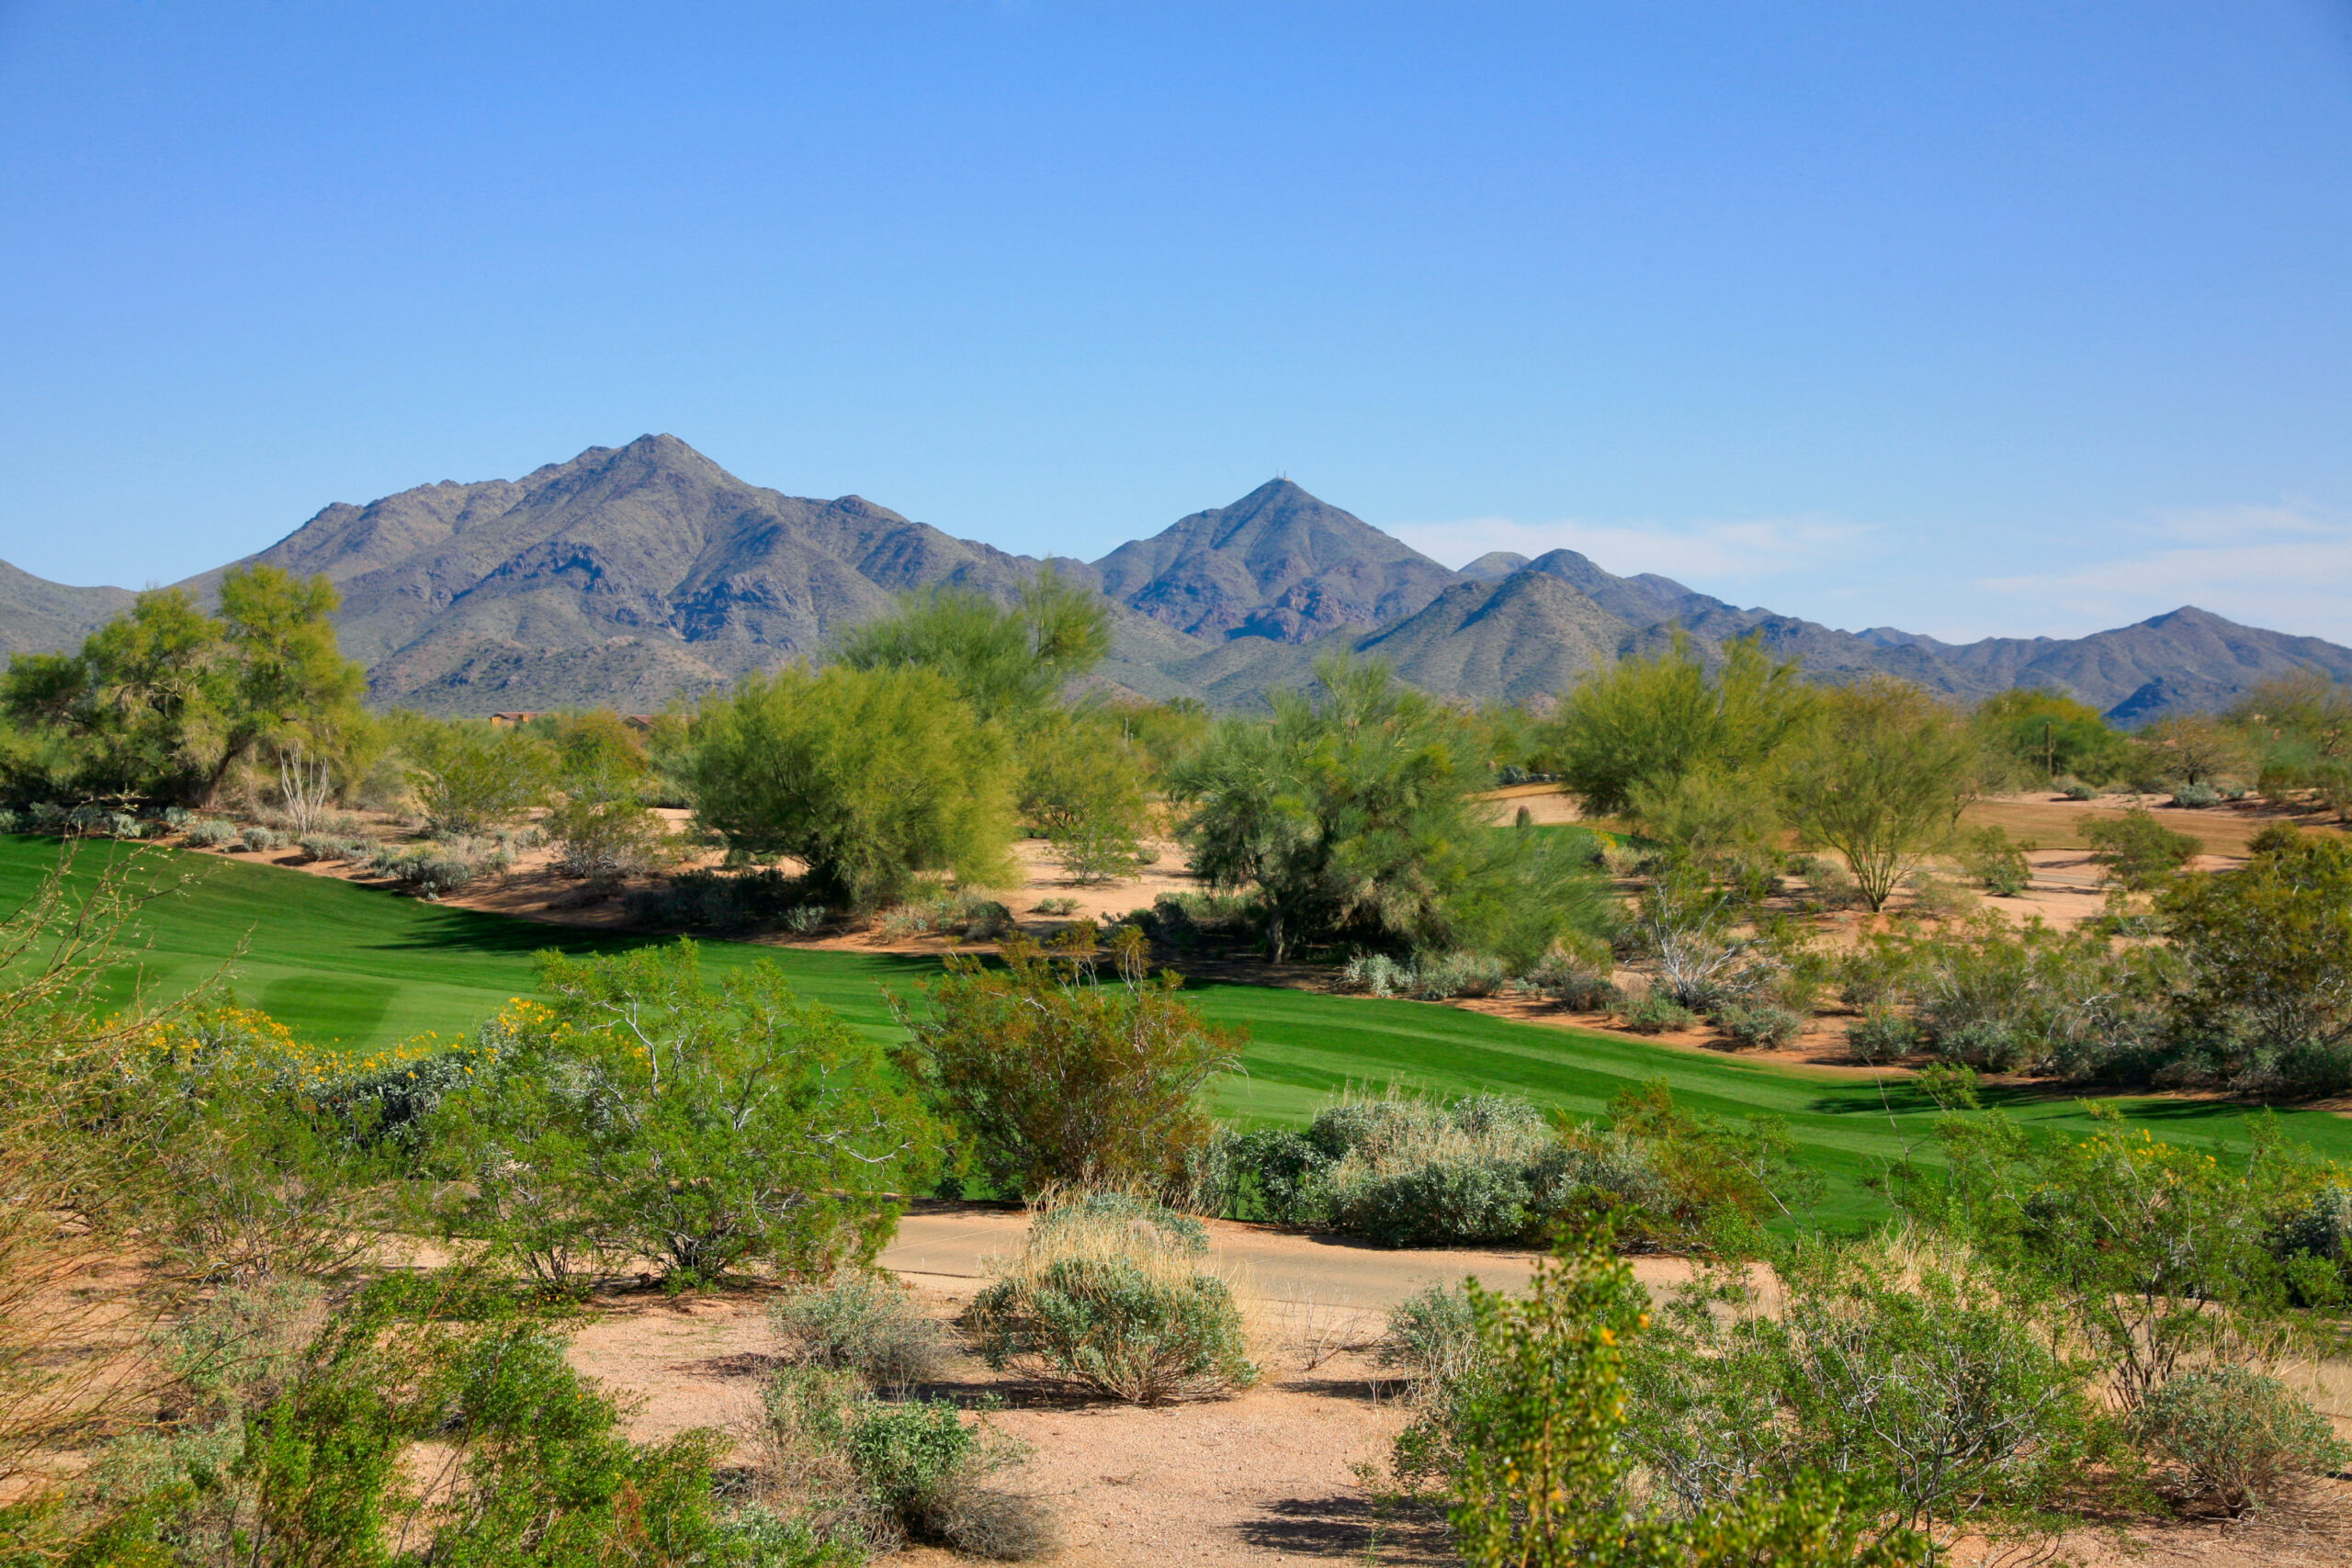 Beginner’s guide to golf in Arizona golf communities: Part 1